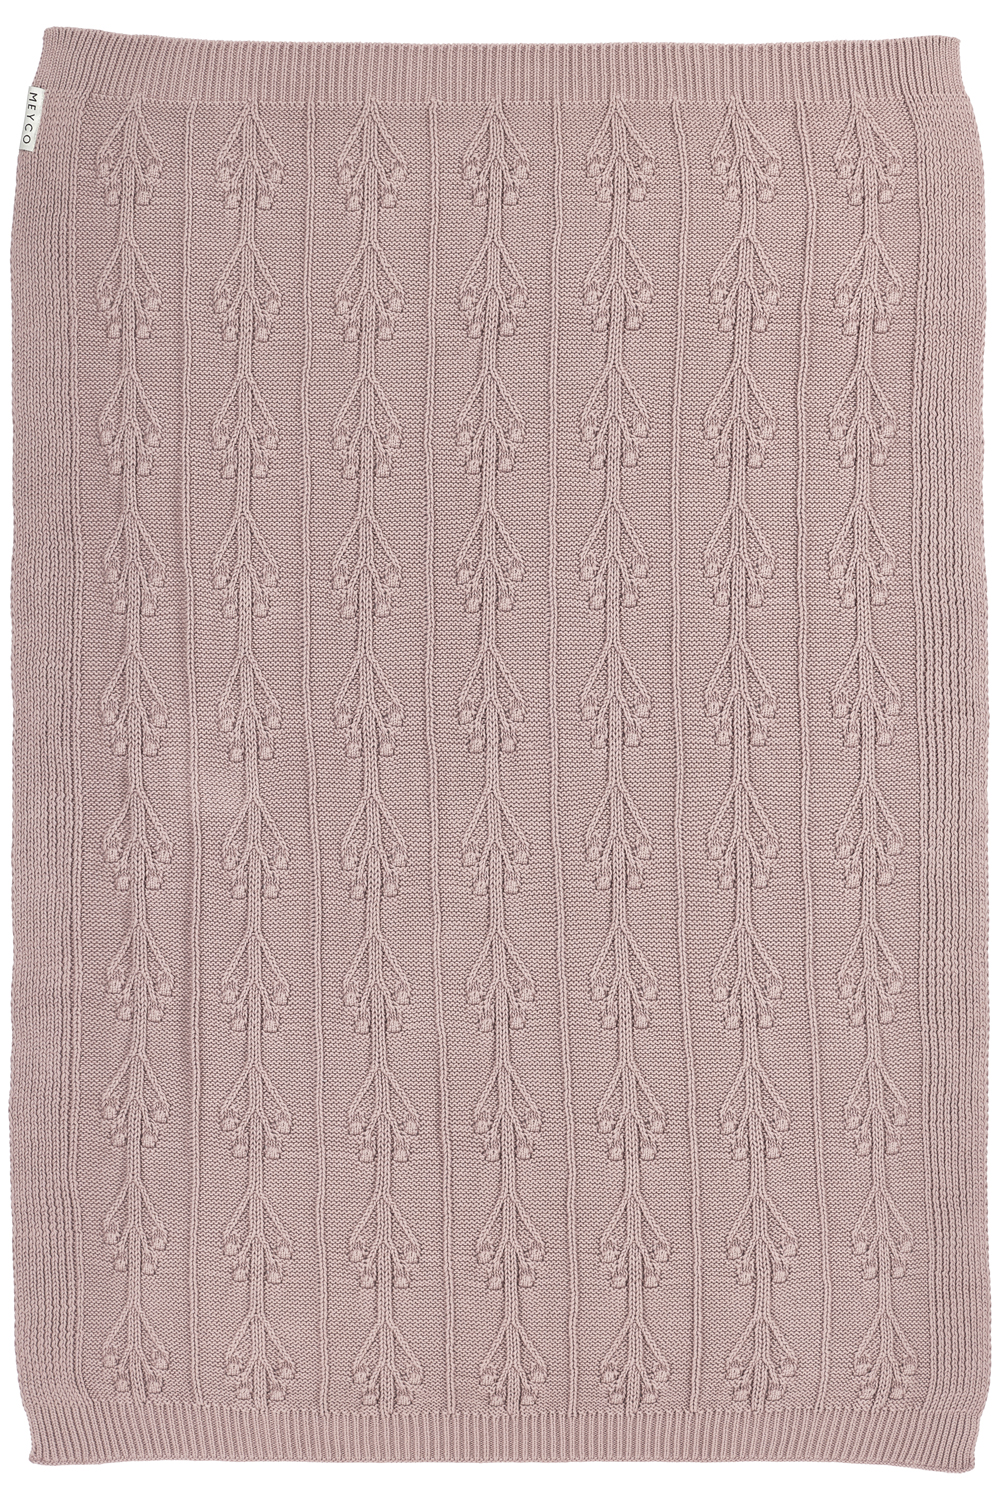 Cot bed blanket Romantic Flower - lilac - 100x150cm